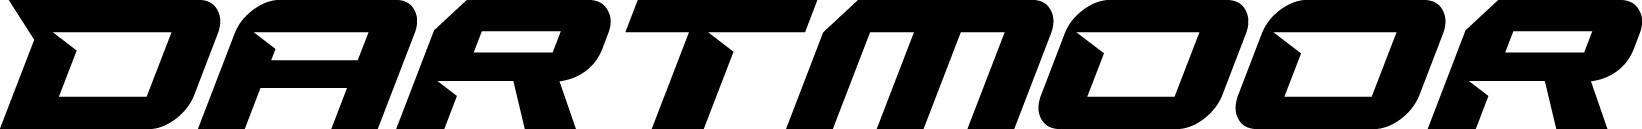 DARTMOOR logo